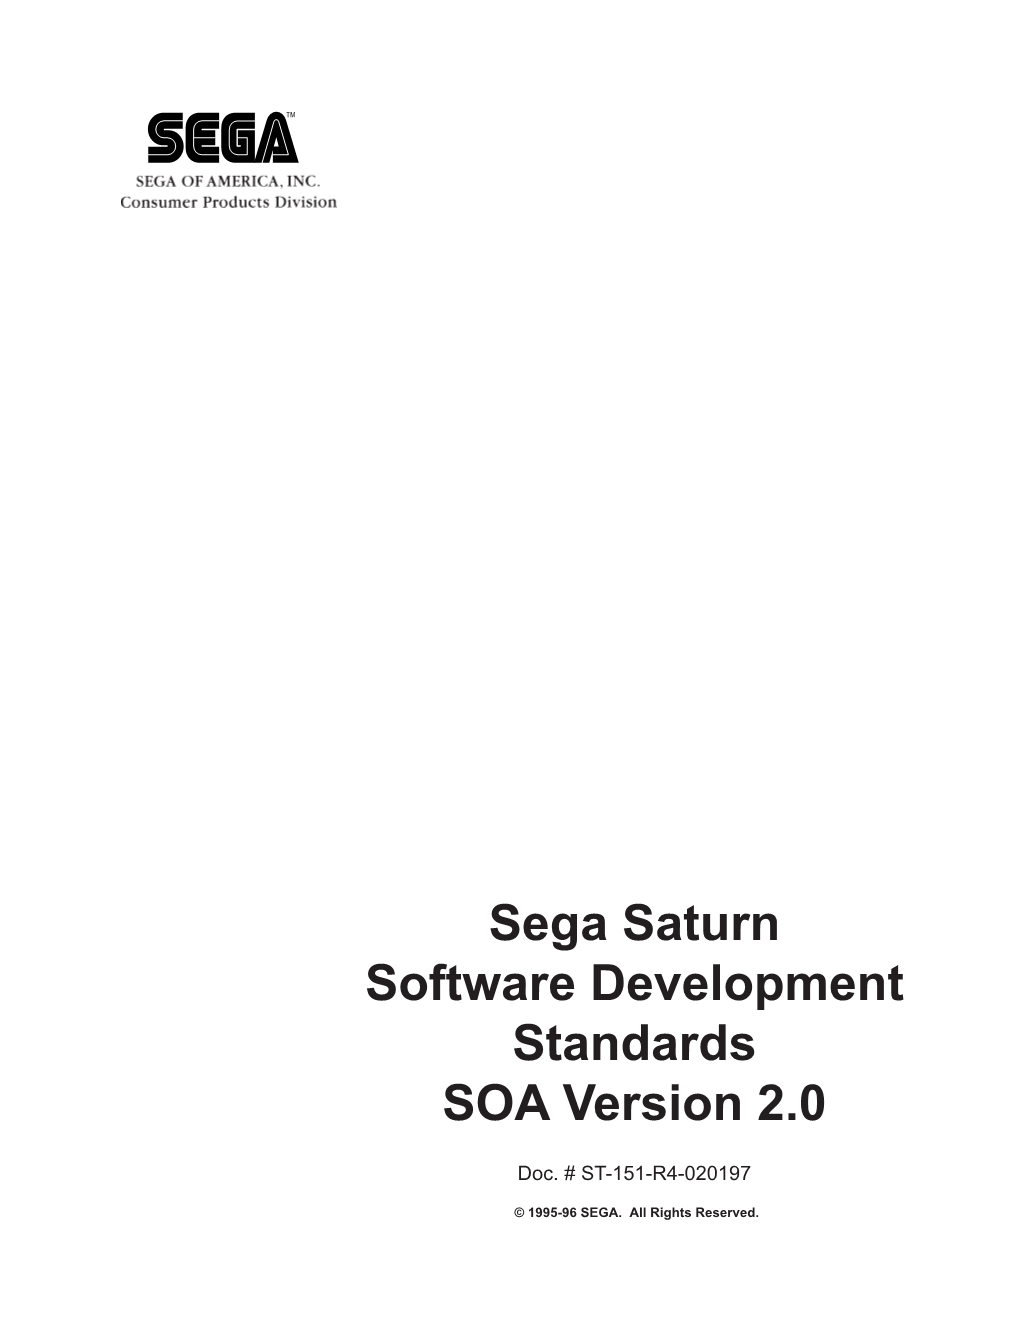 Sega Saturn Software Development Standards SOA Version 2.0